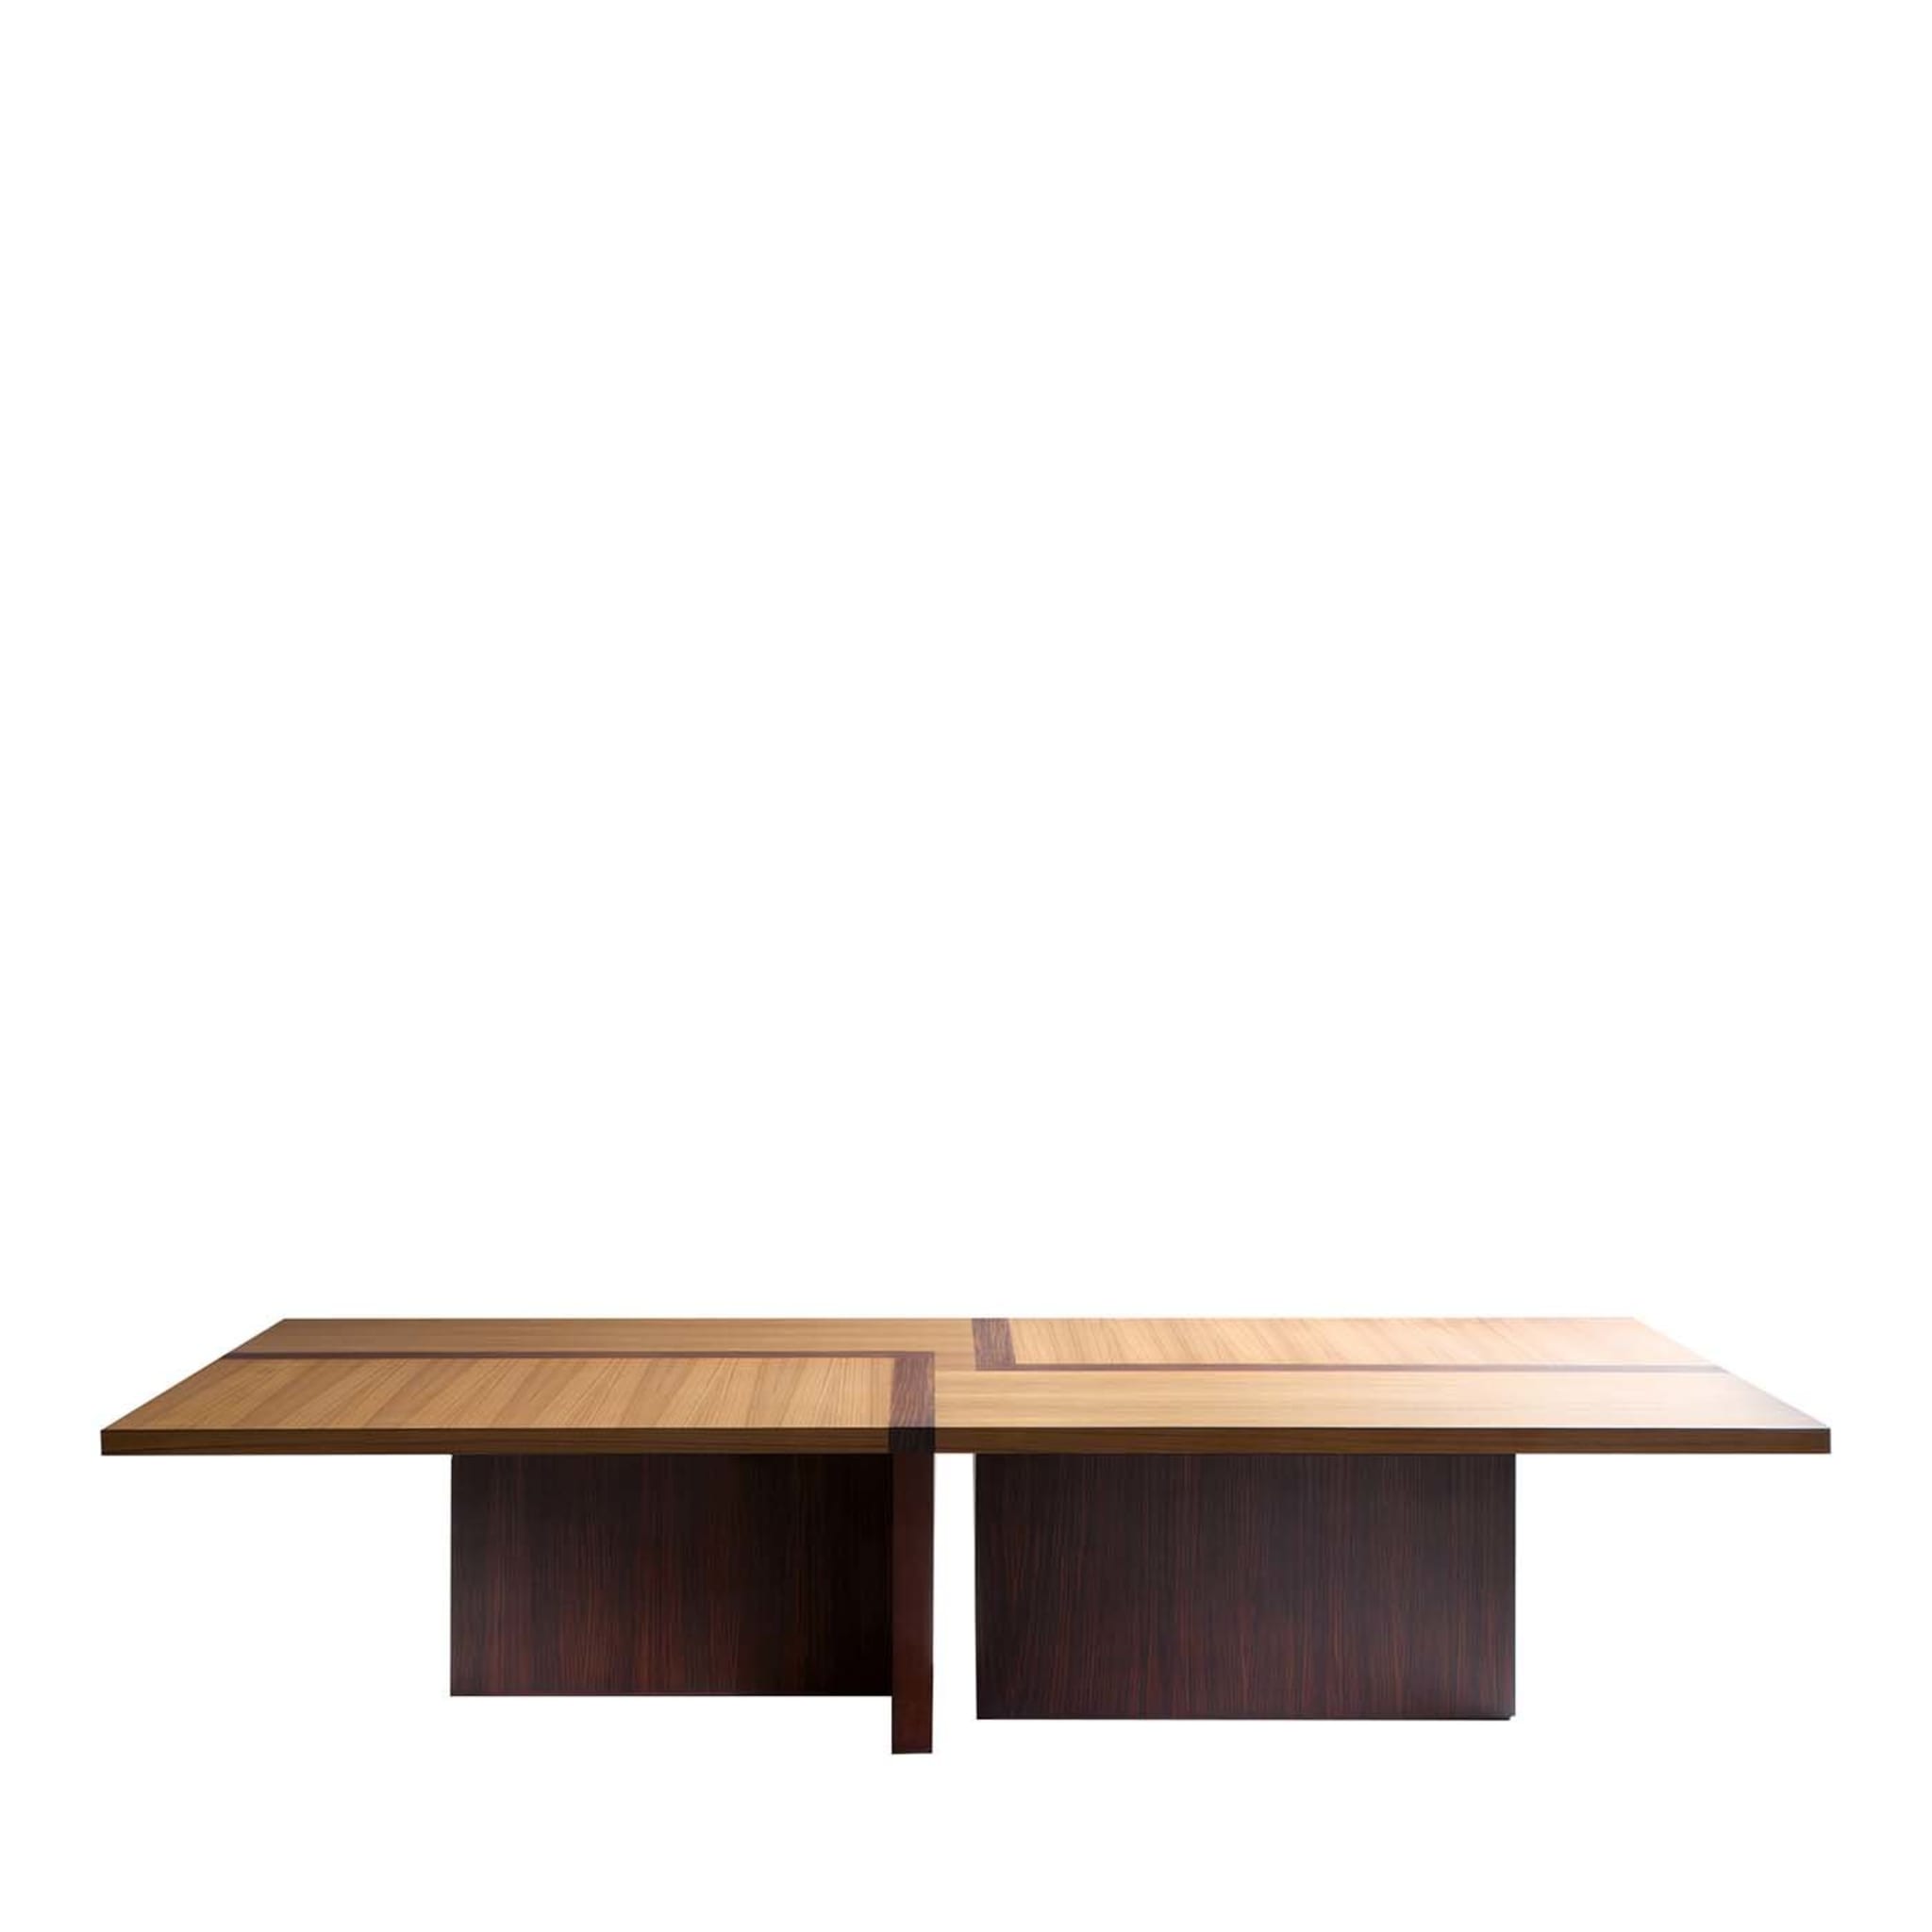 BD 07 Rectangular Table by Bartoli Design - Main view